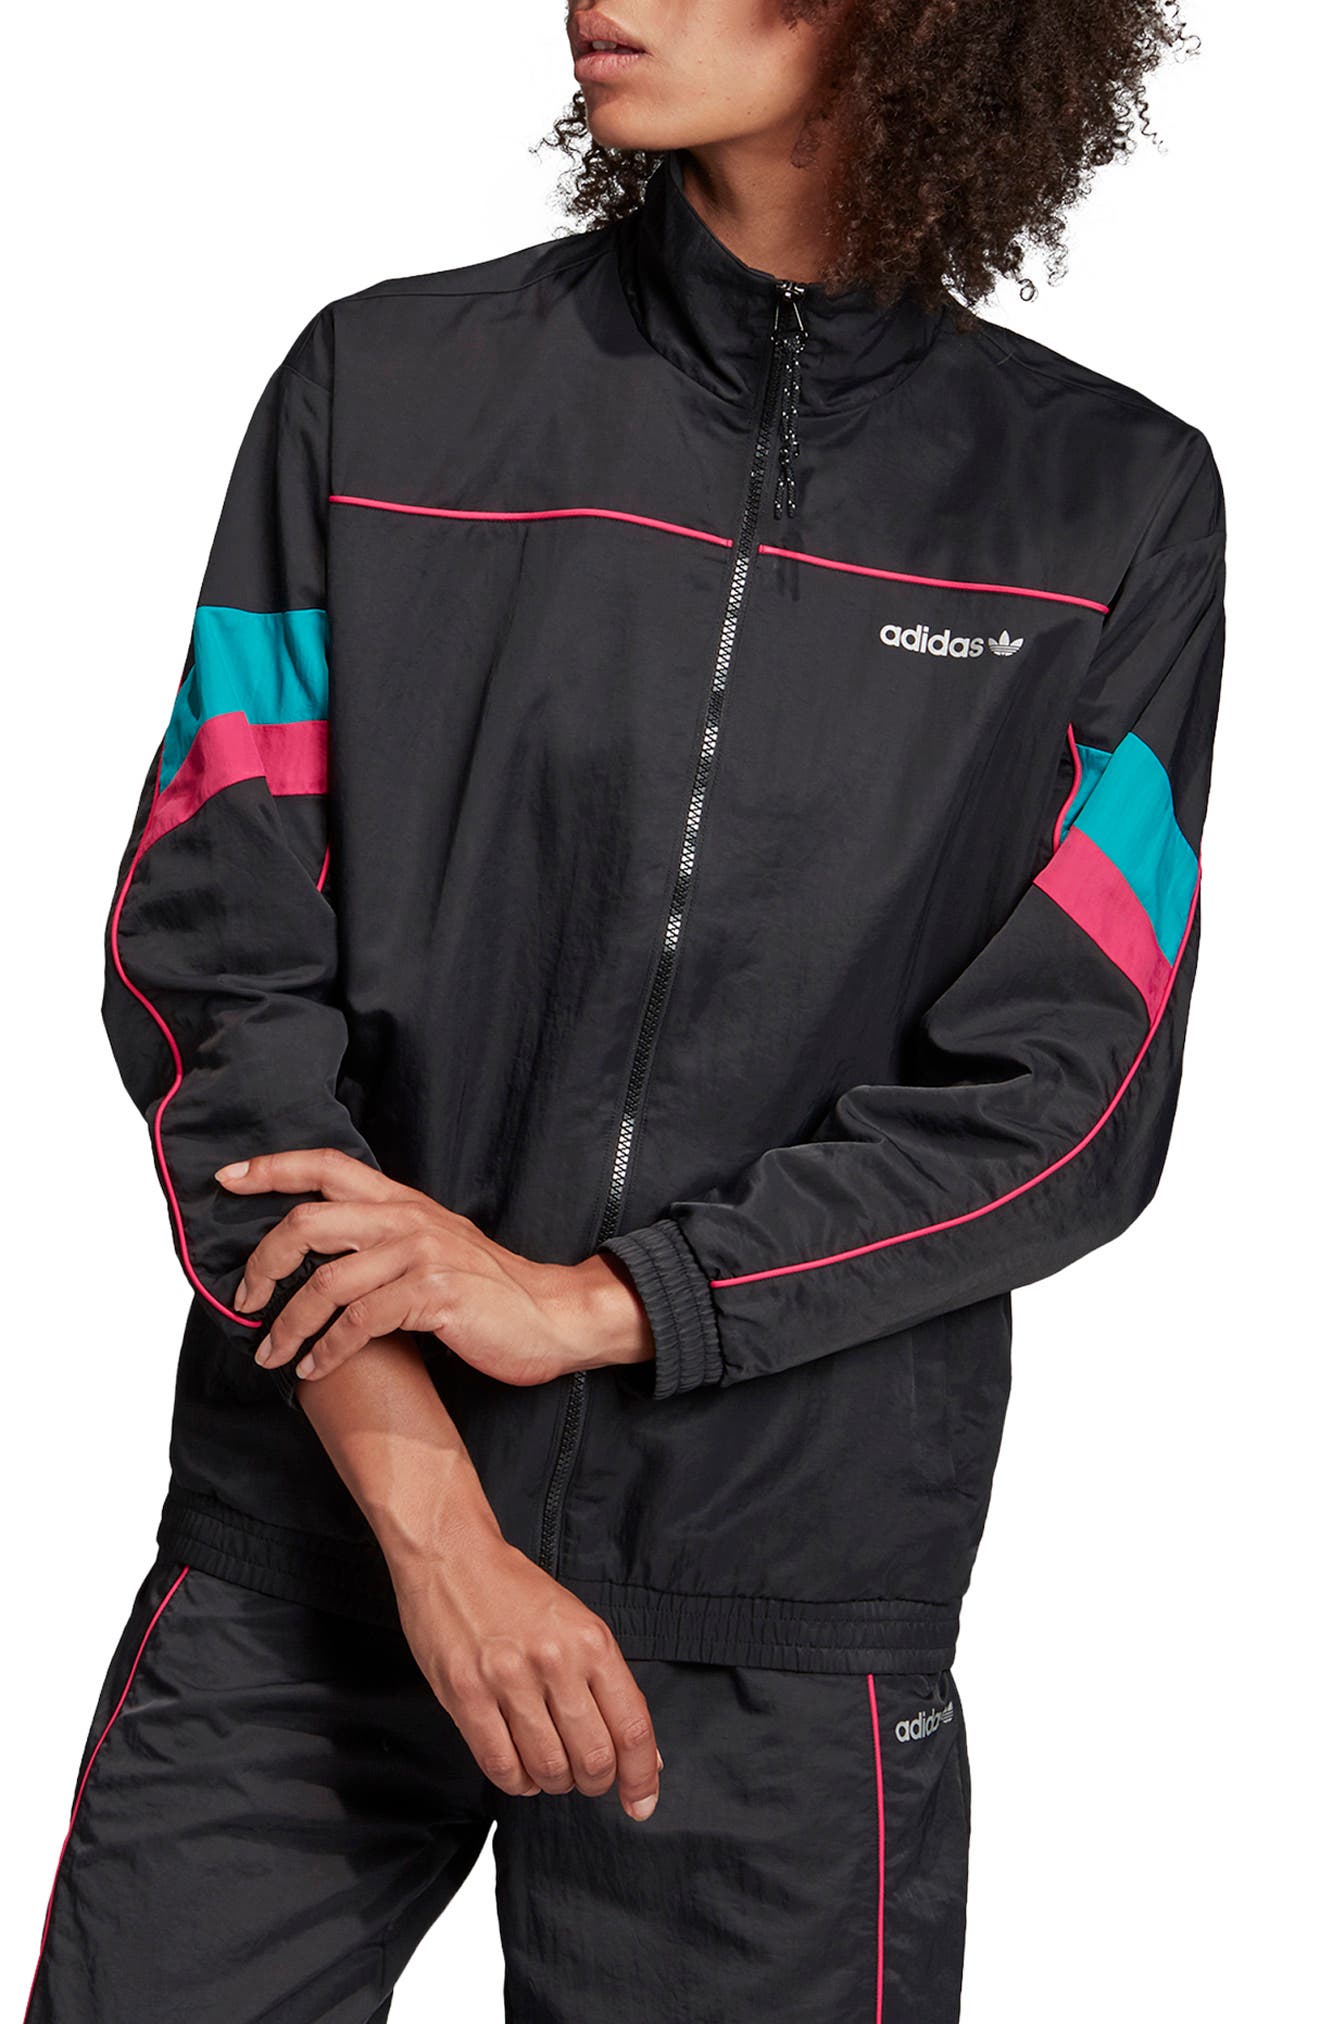 adidas tech track jacket